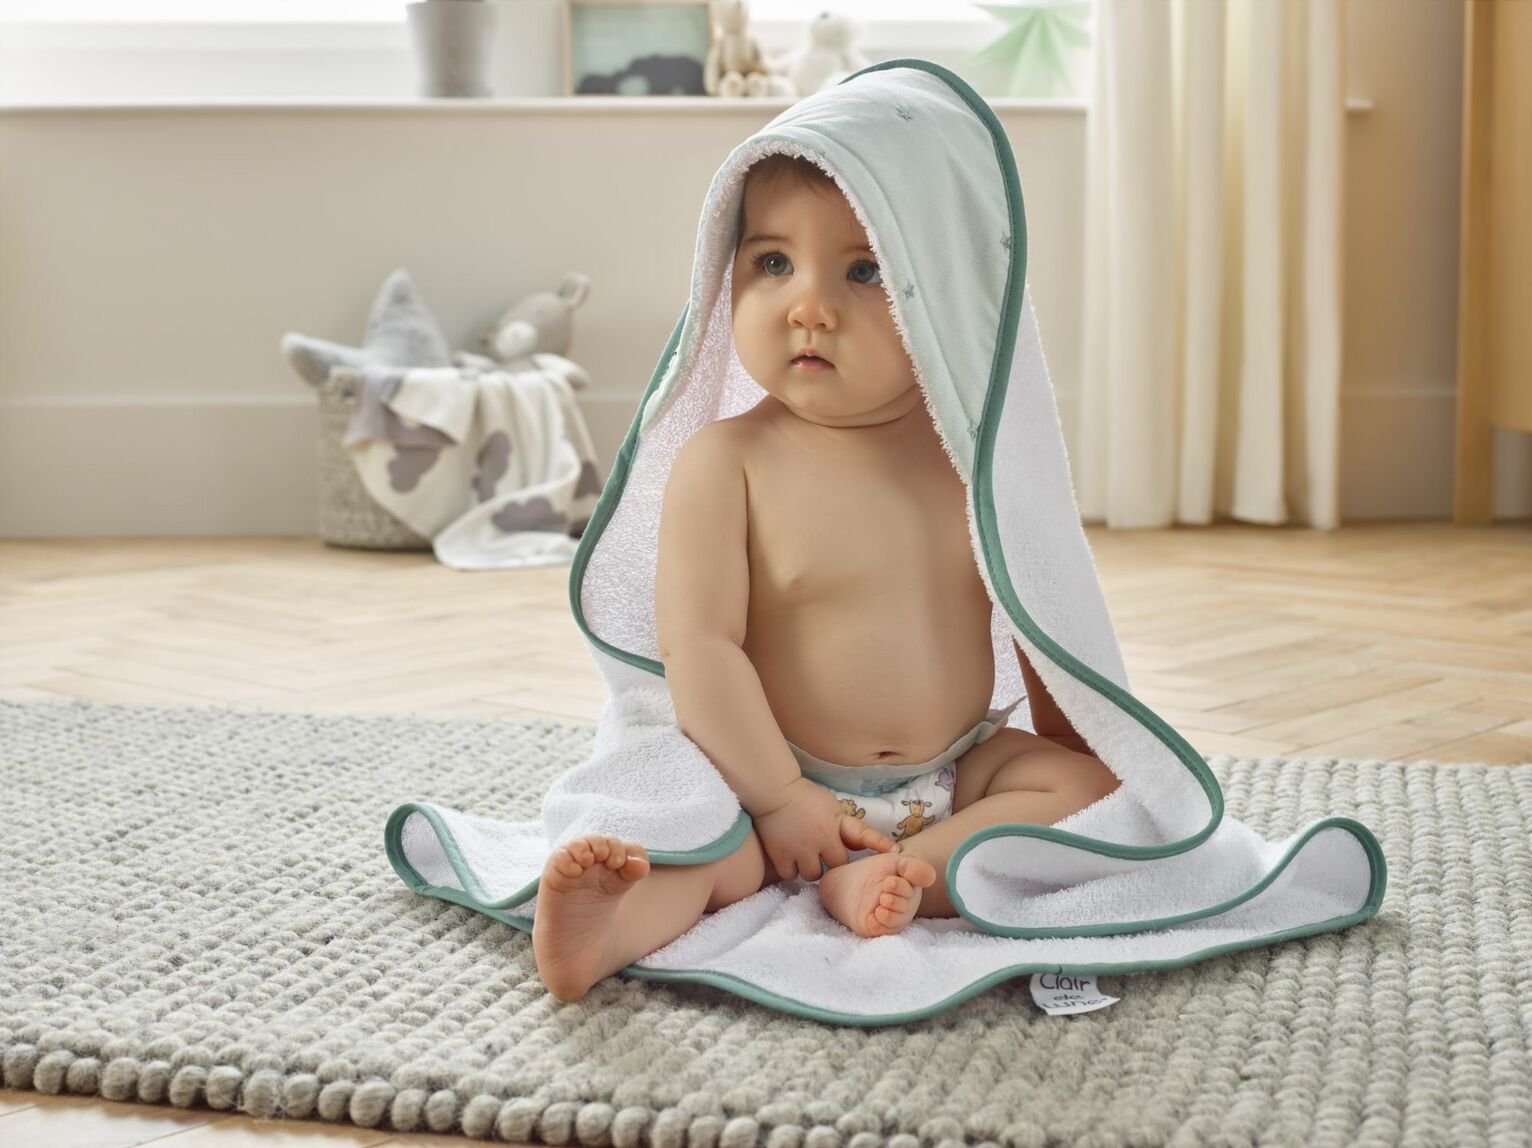 argos baby towels